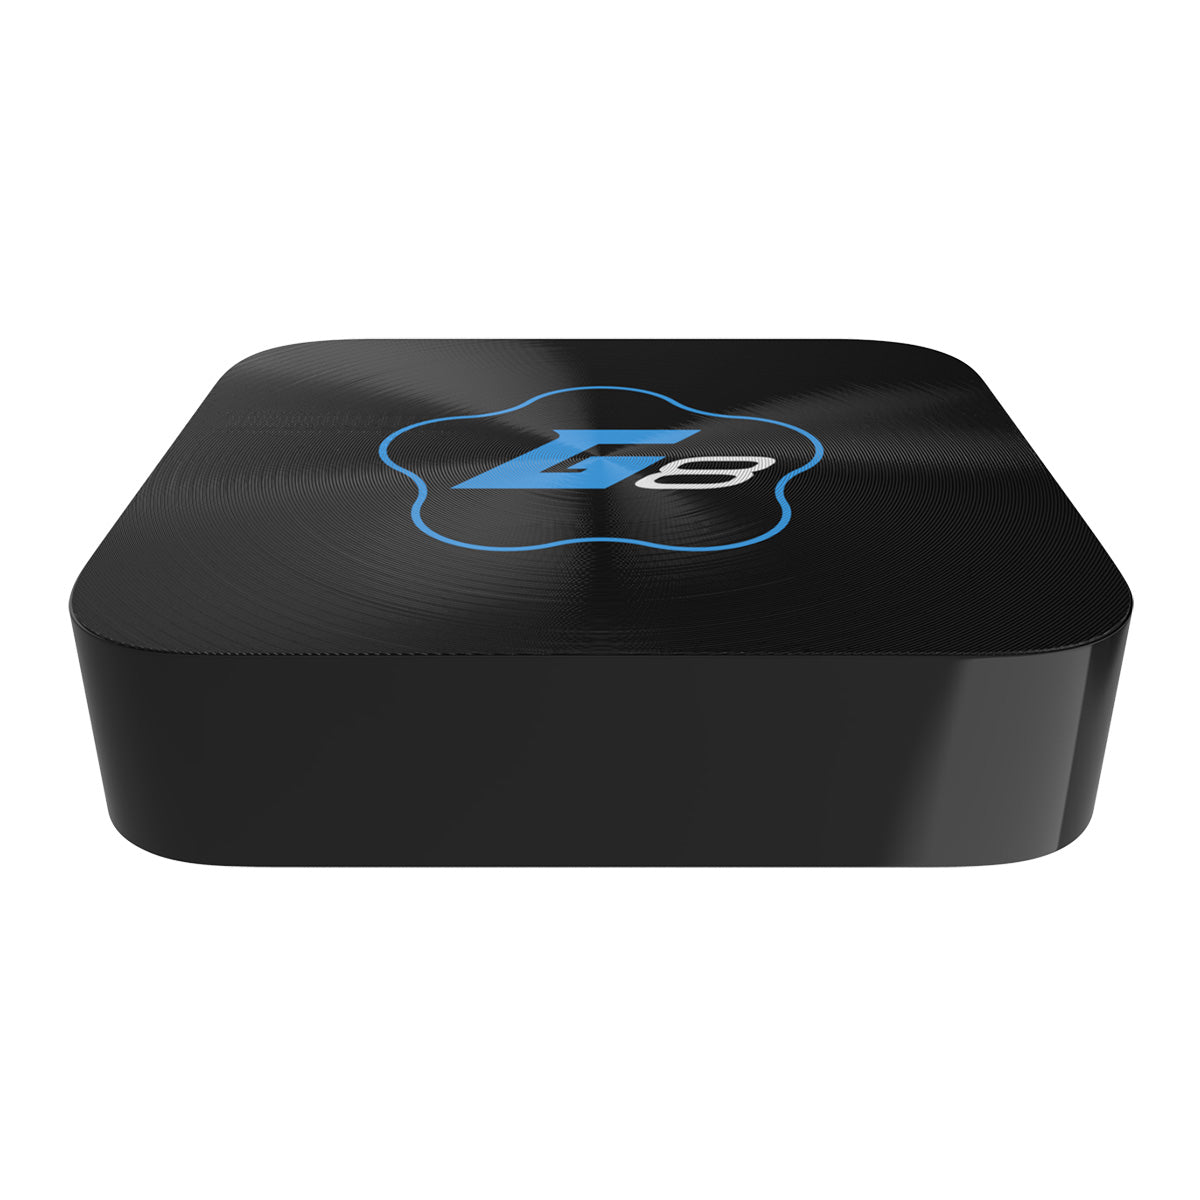 GoStreamer G8 TV Box Android Quad Core 4K Ultra HD Wi-Fi